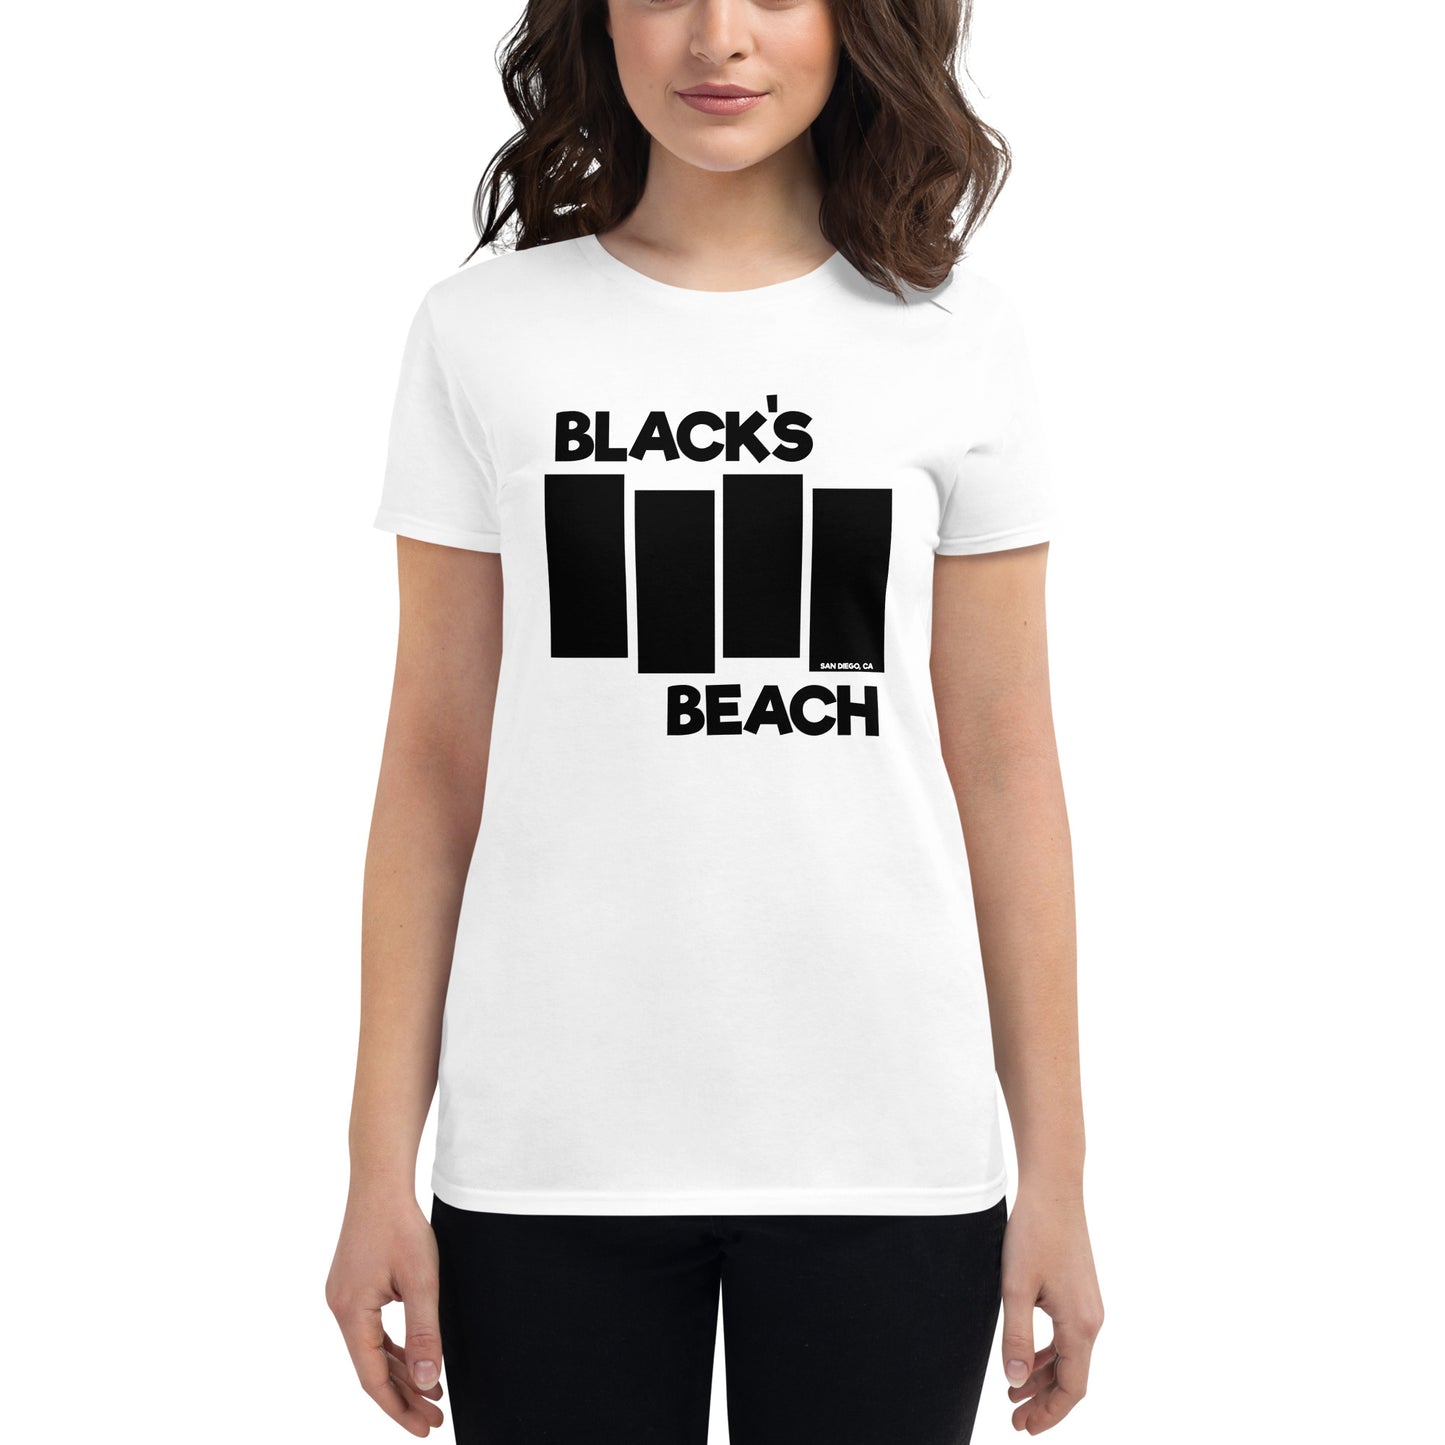 Black's Beach Tees / Style 03 / Women's short sleeve t-shirt